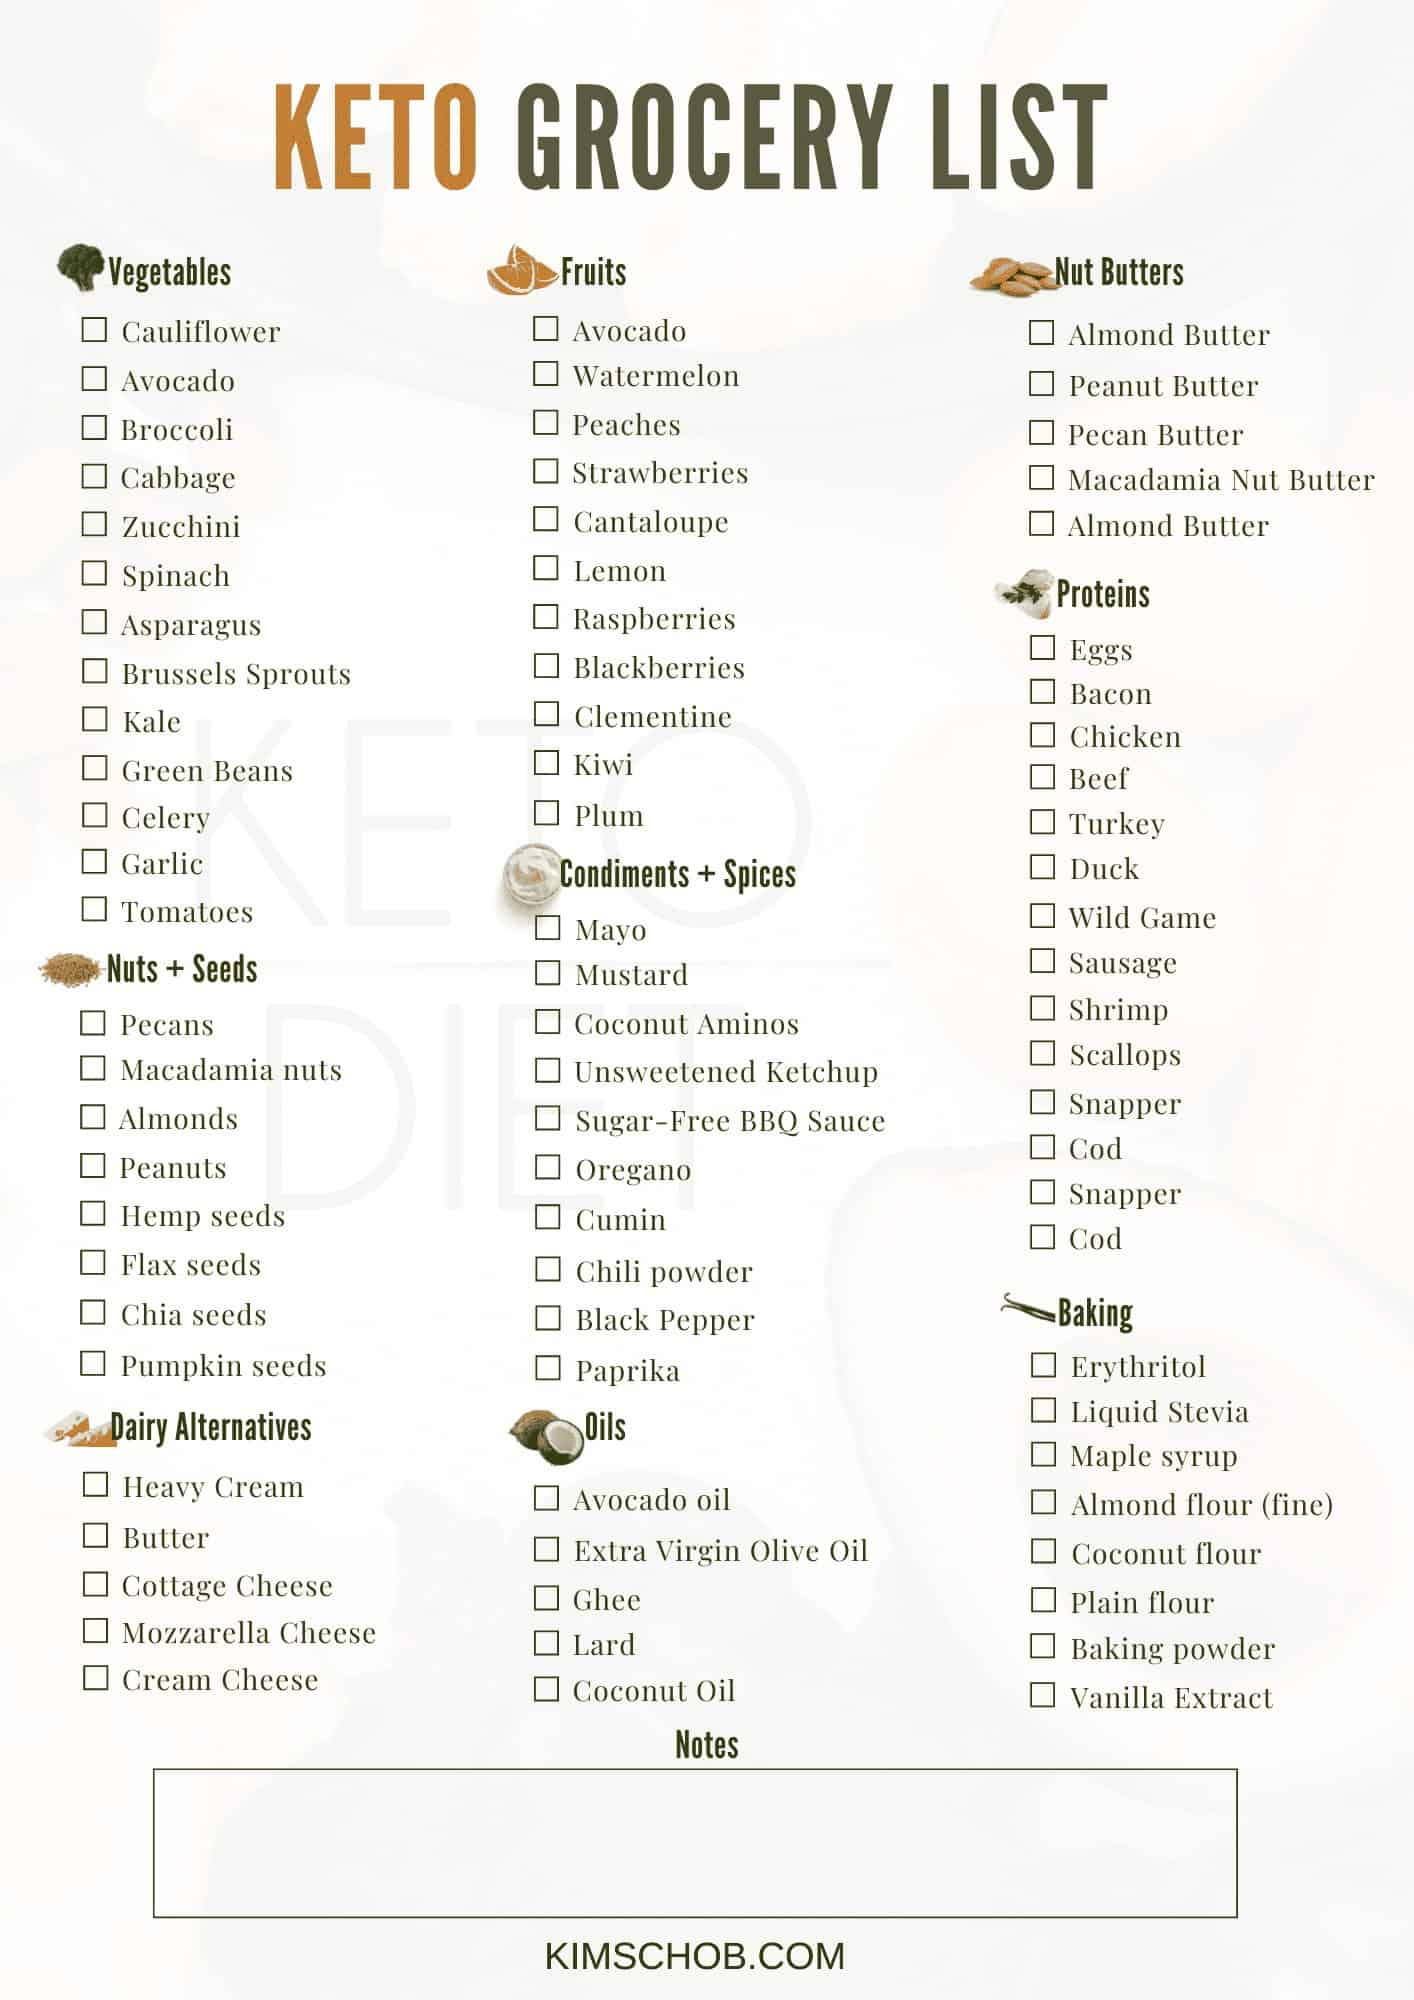 Keto Grocery List - Free Printable! - Kim Schob pertaining to Free Printable Keto Food List